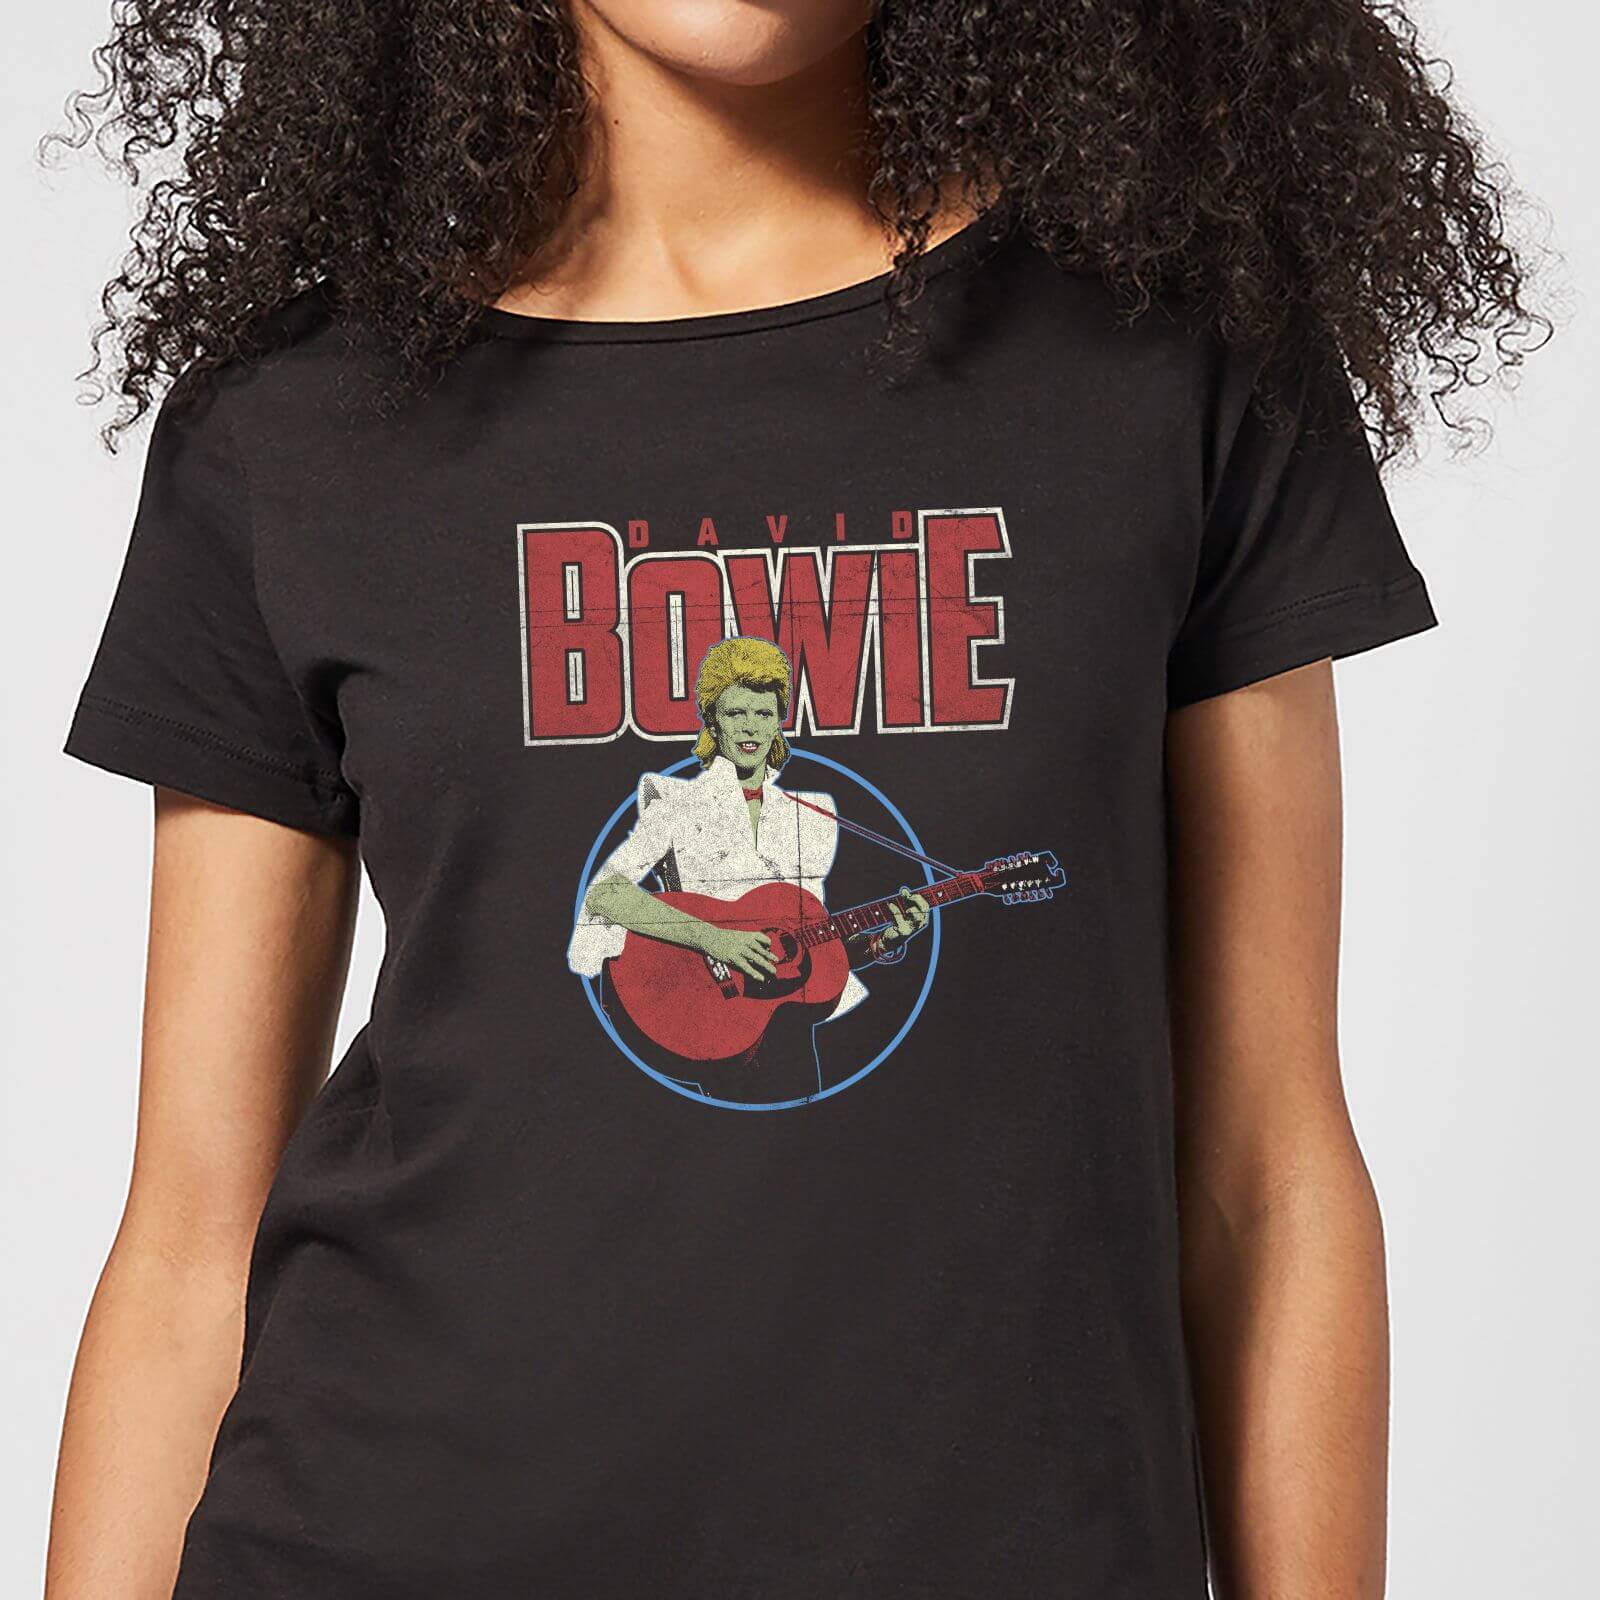 David Bowie Bootleg Women's T-Shirt - Black - S - Black